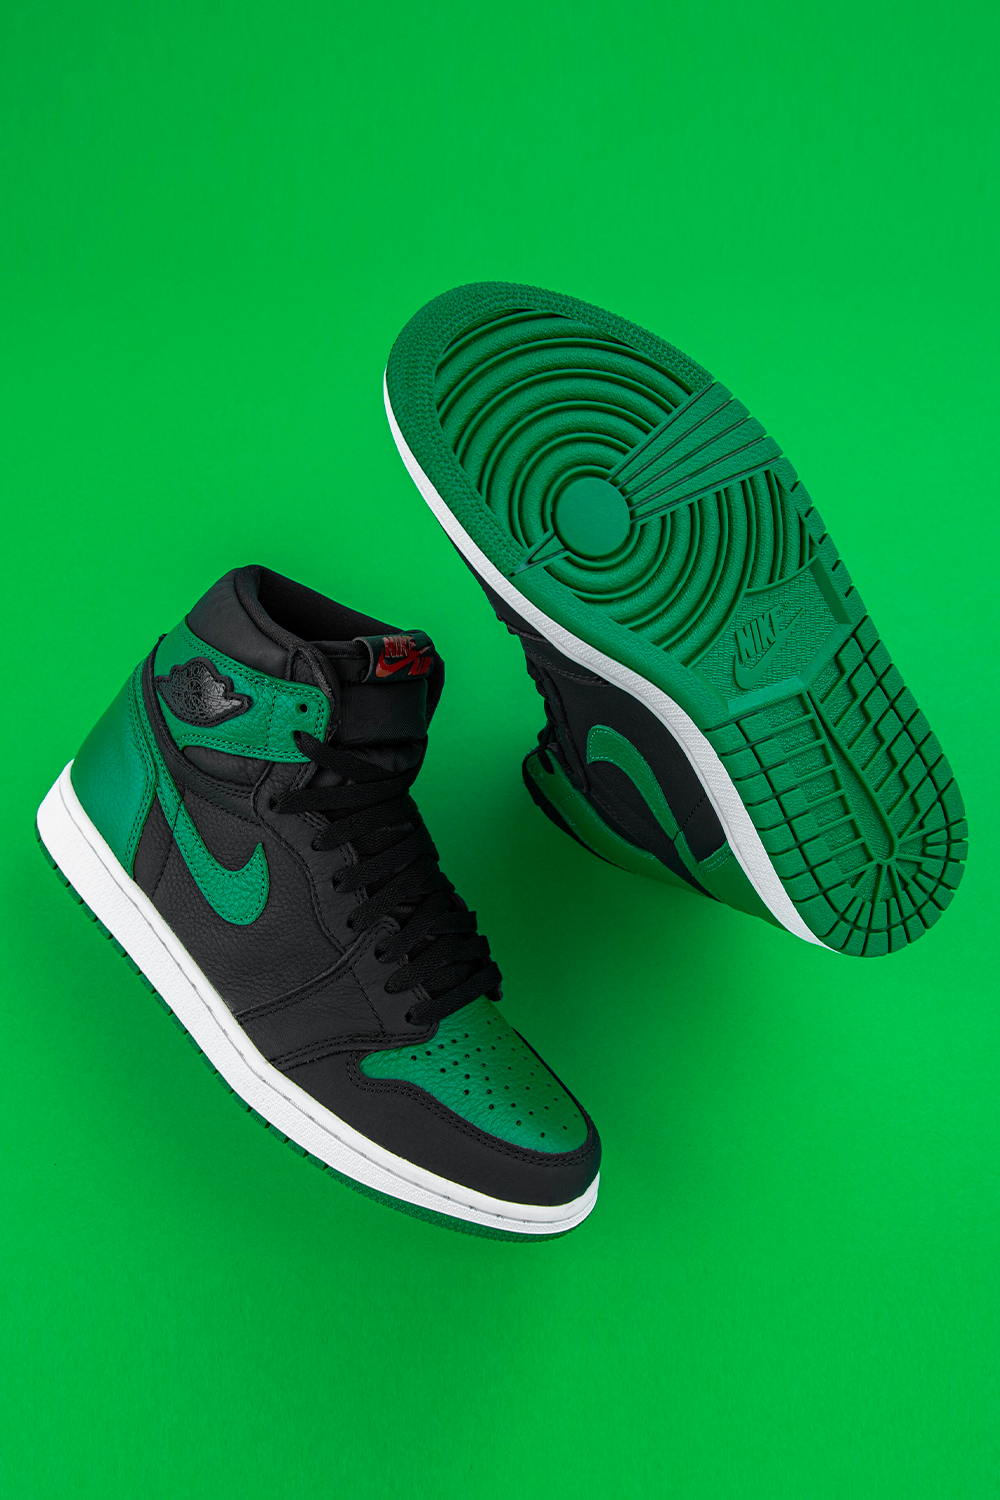 green & black jordan 1s